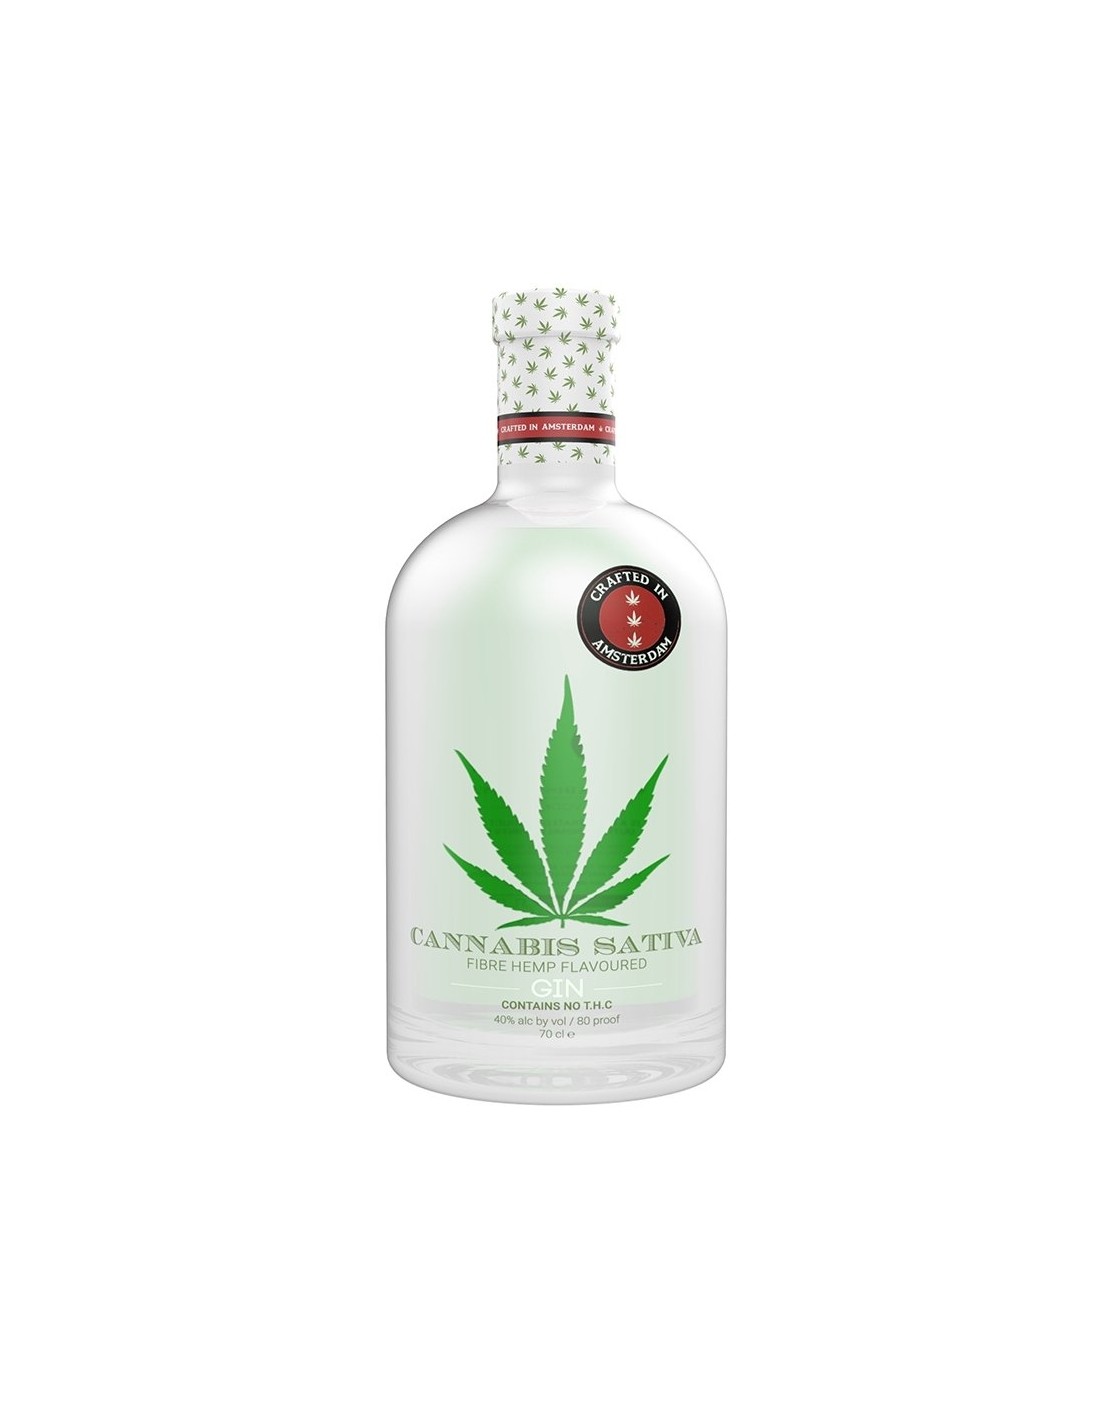 Gin Cannabis Sativa 40% alc., 0.7L, Olanda